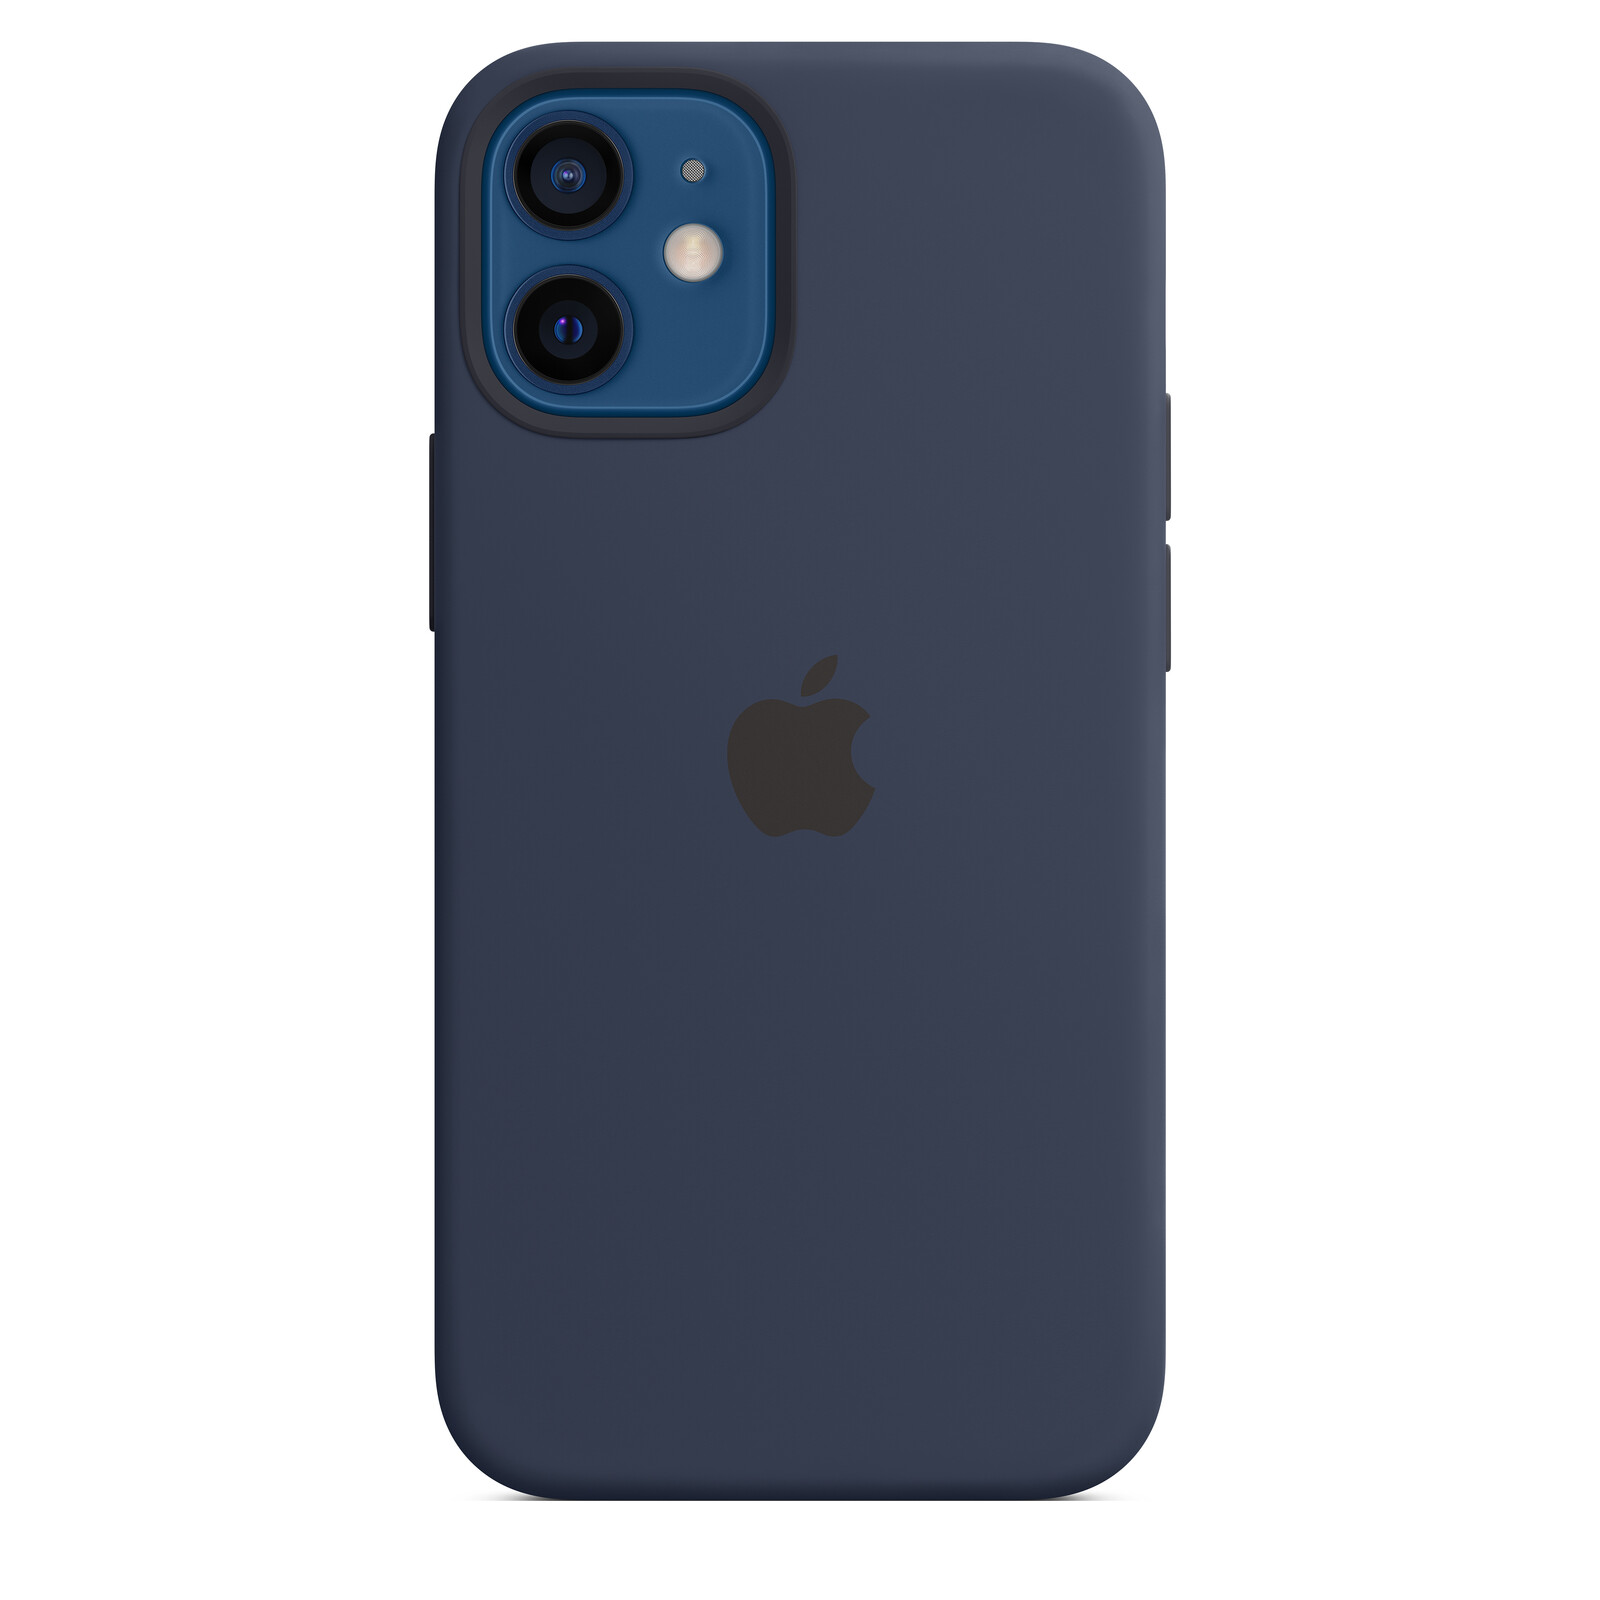 Apple iPhone 12 mini Silikon Case mit MagSafe dunkelmarine